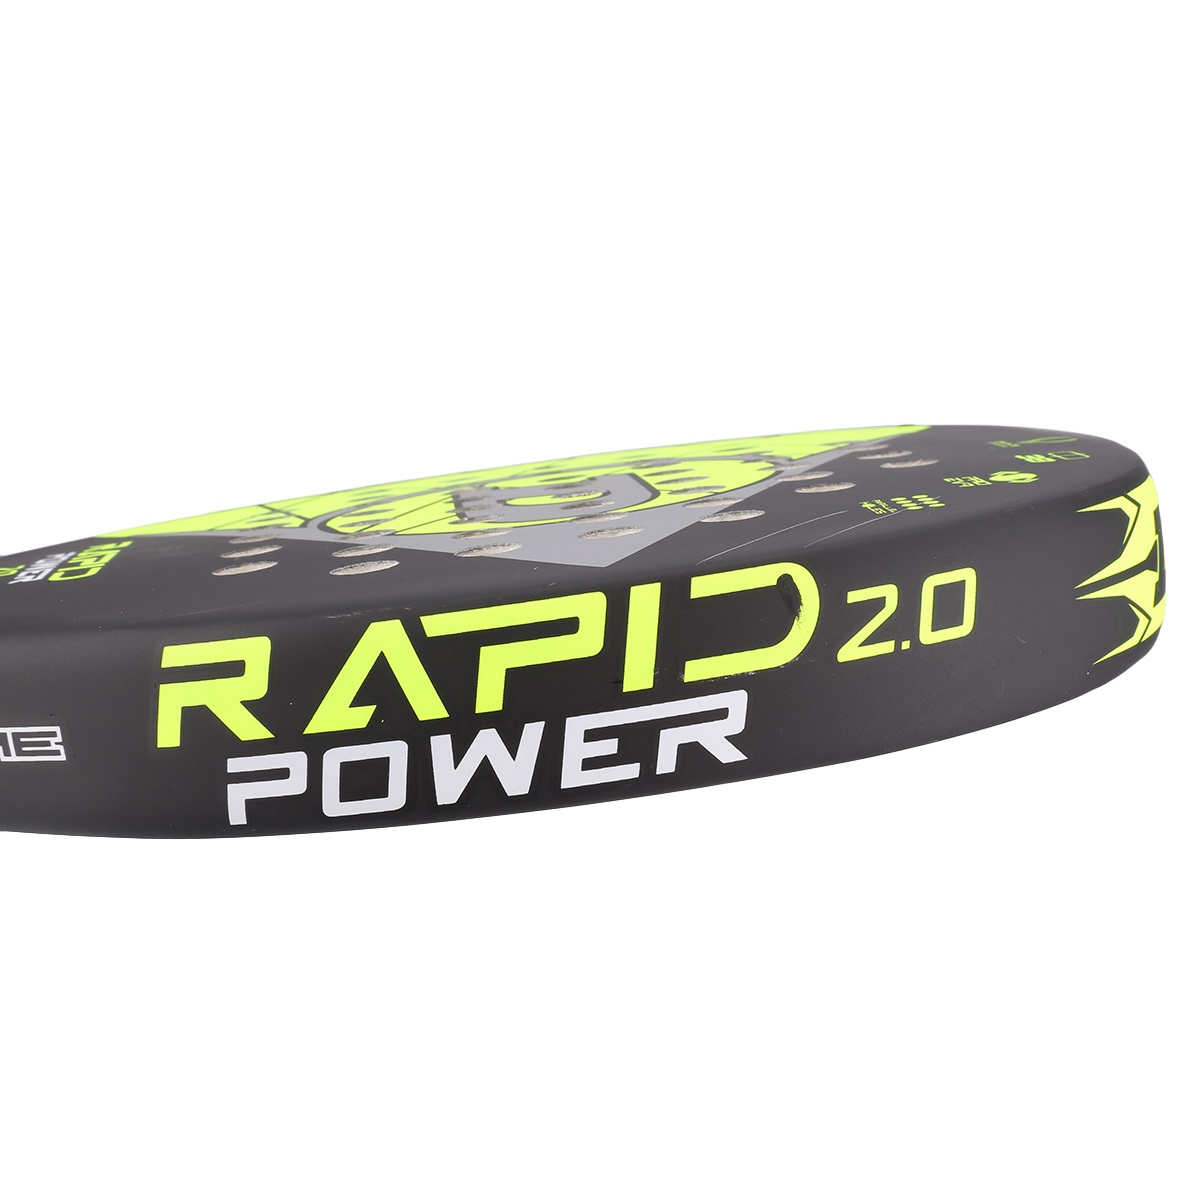 Paleta Dunlop Rapid Power 2.0,  image number null